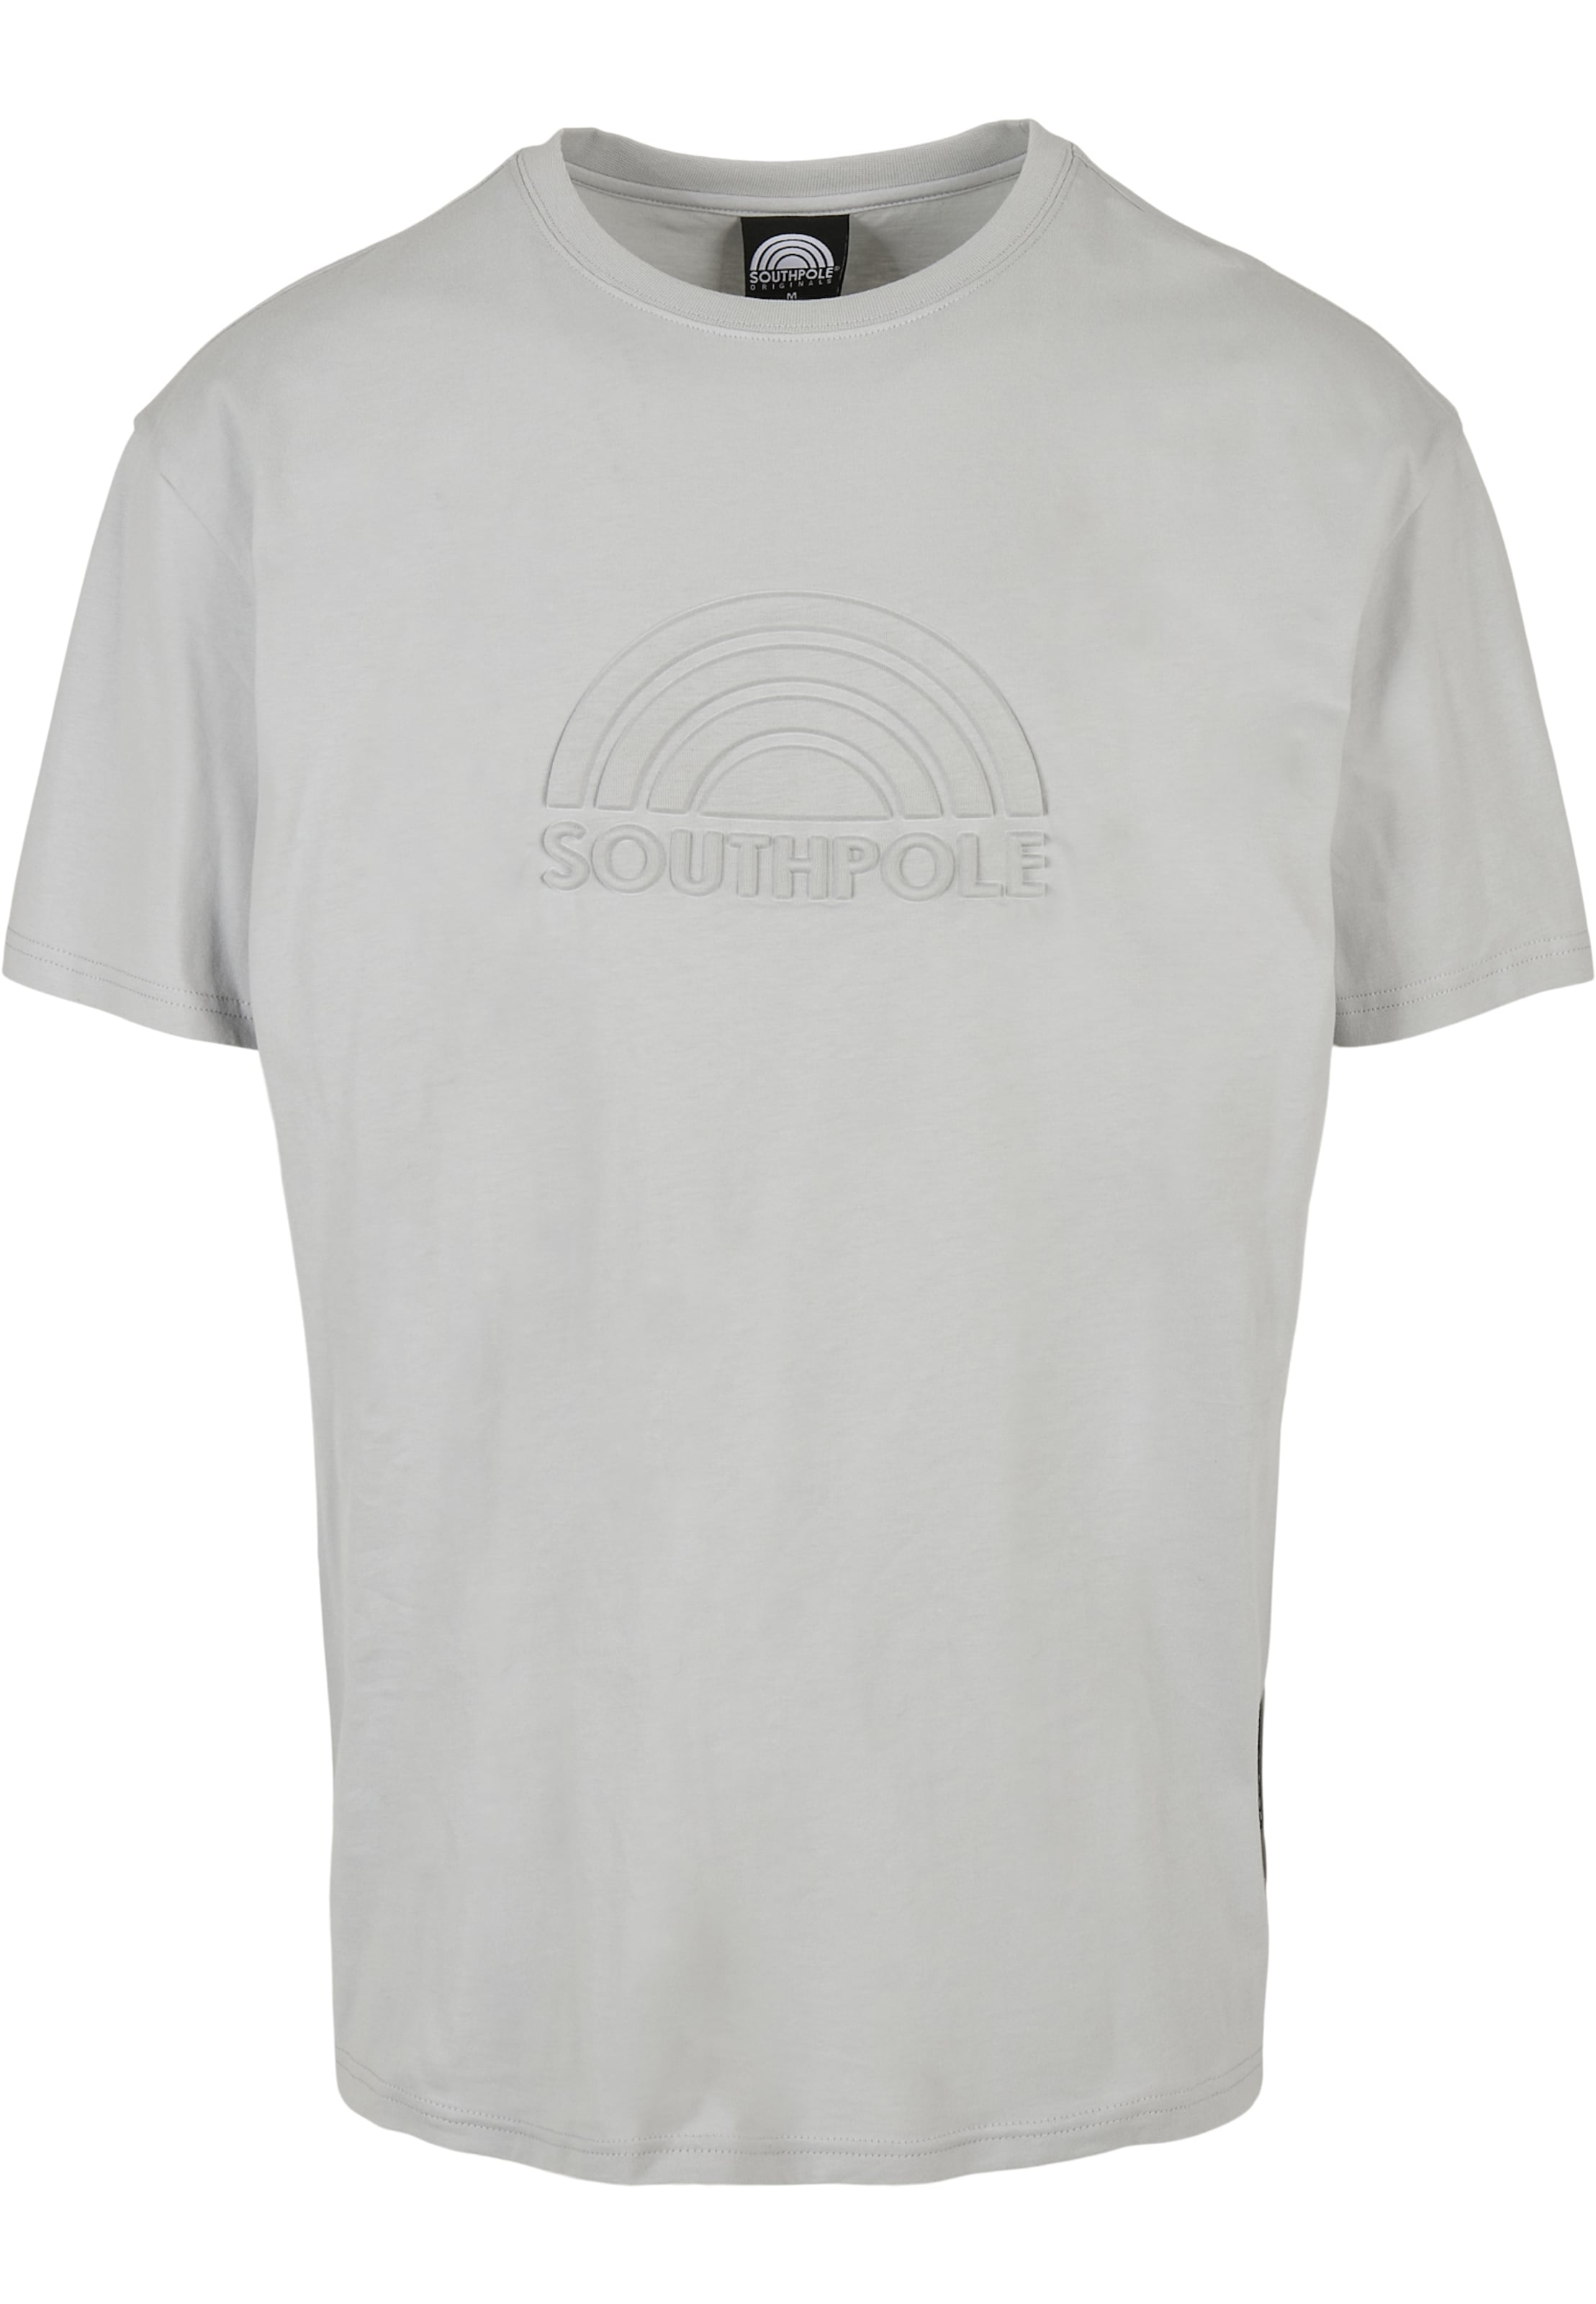 Männer Shirts SOUTHPOLE T-Shirt in Hellgrau - QM39319